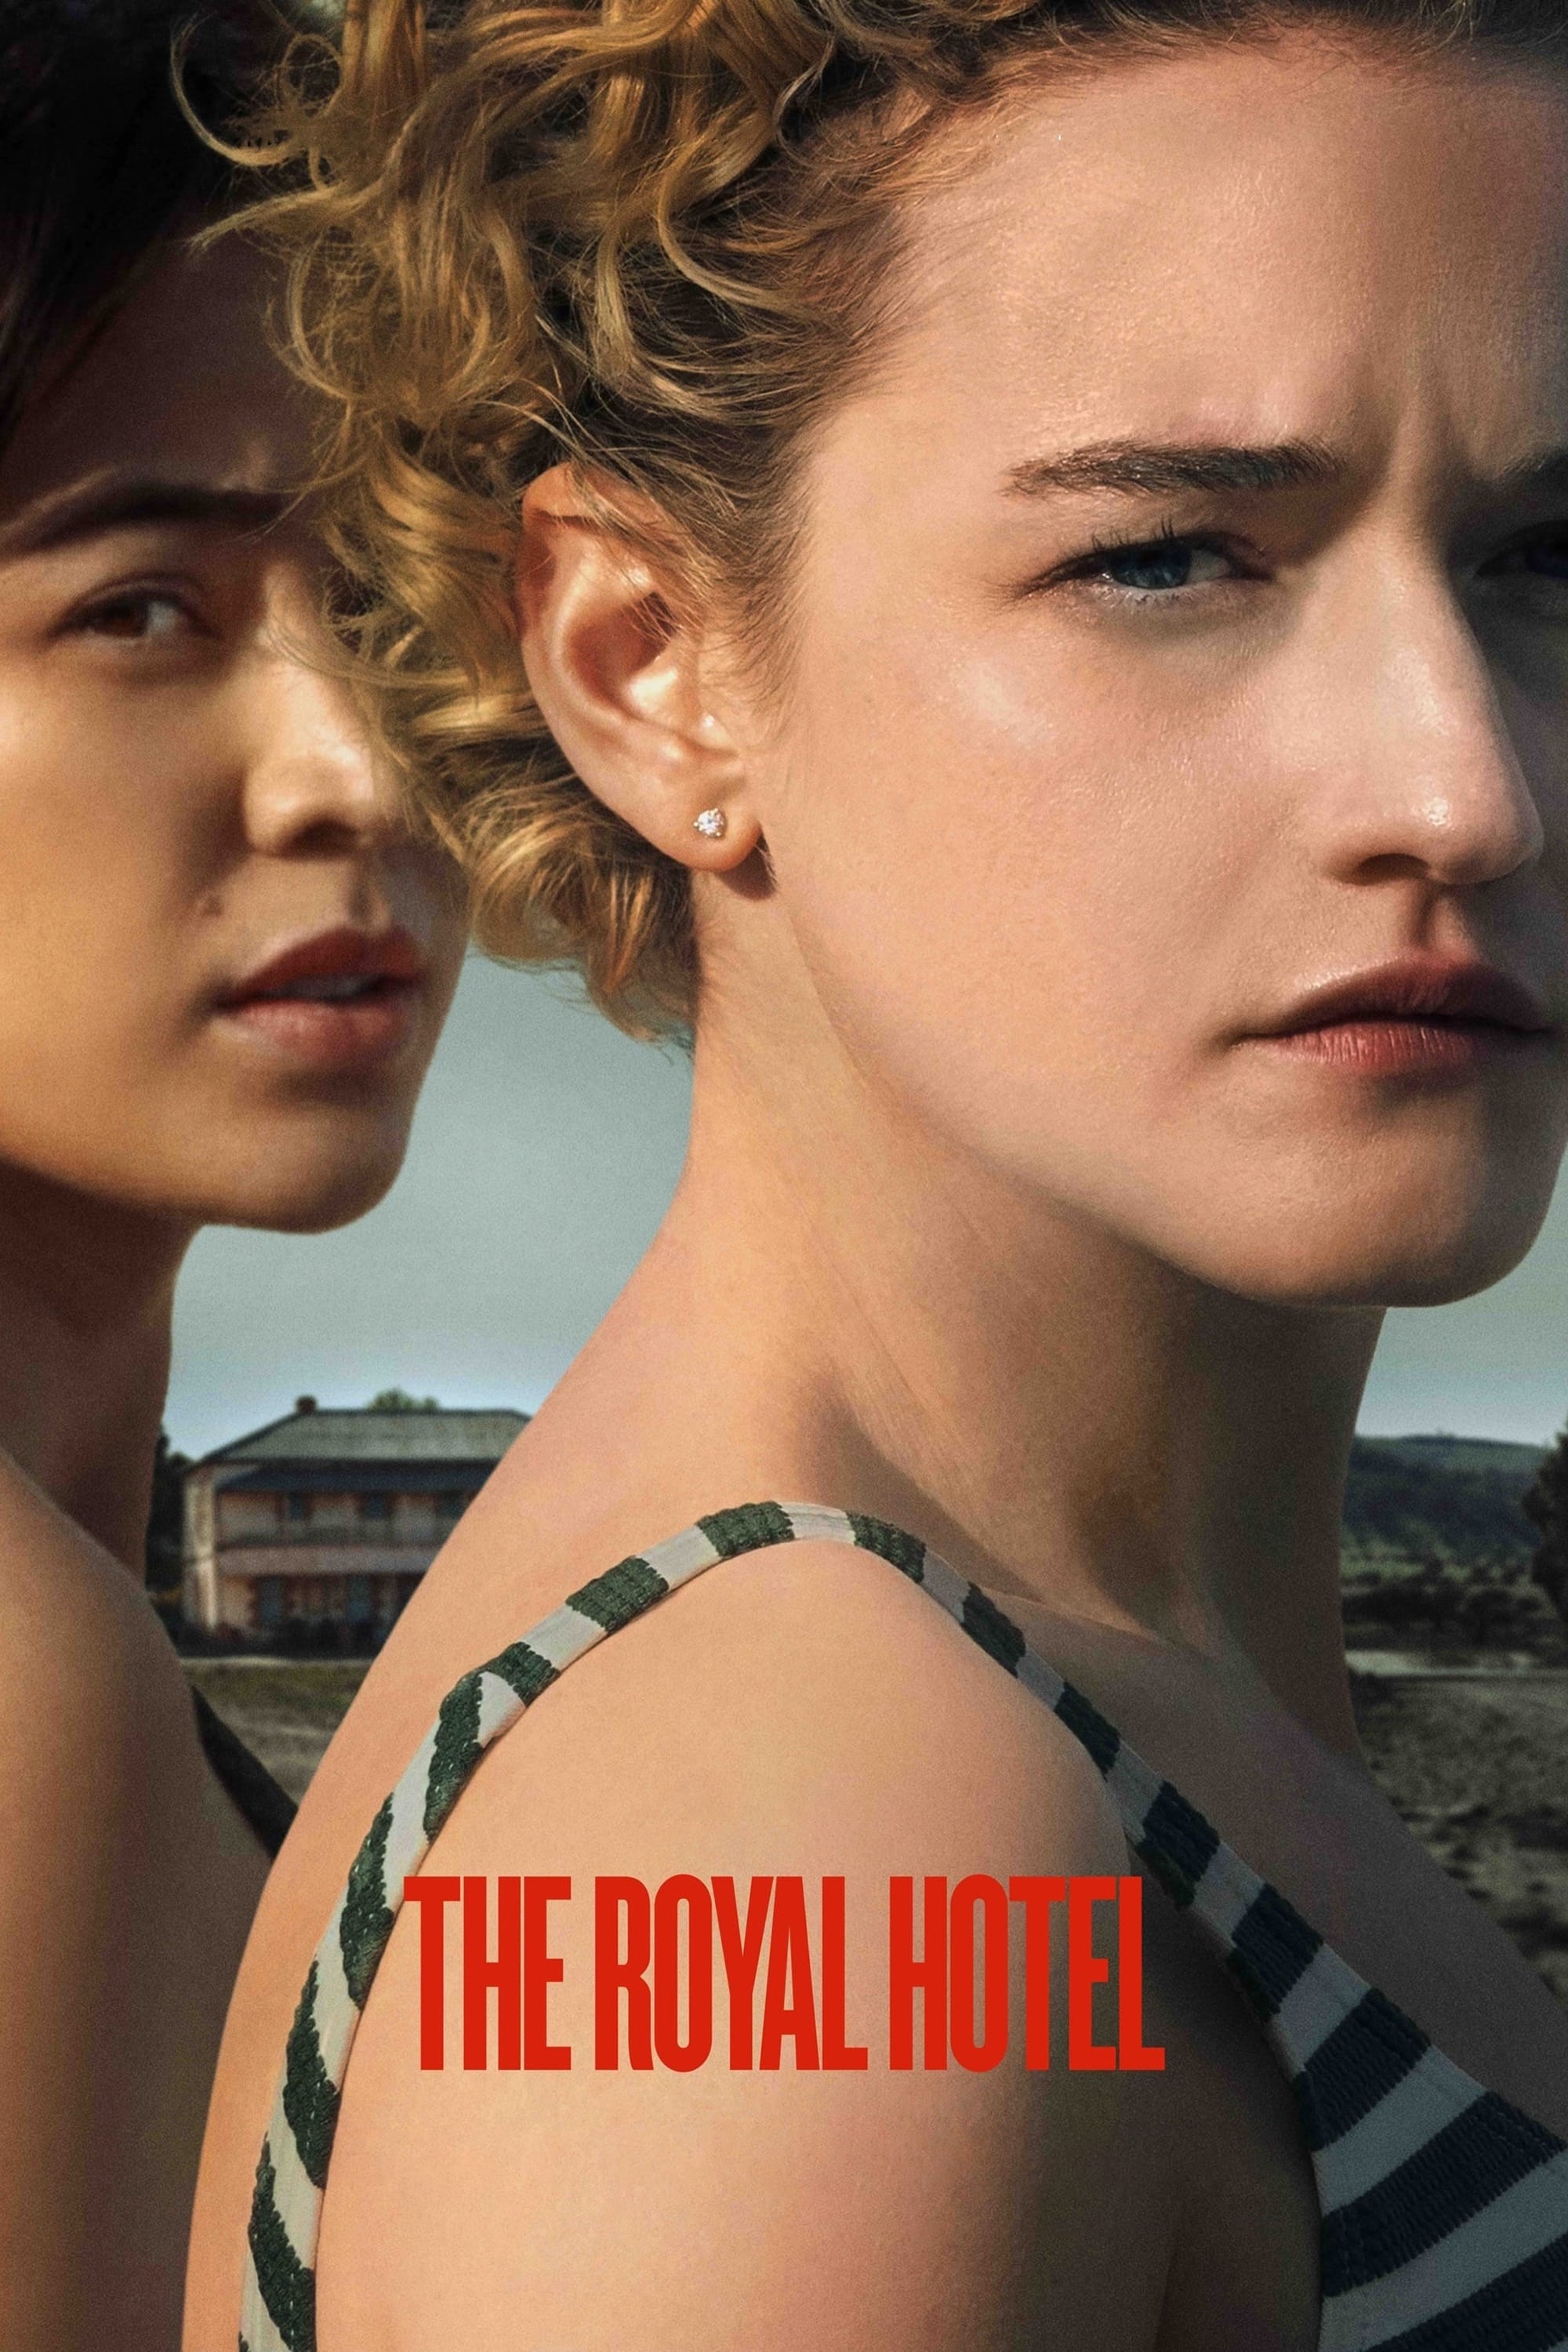 The Royal Hotel film